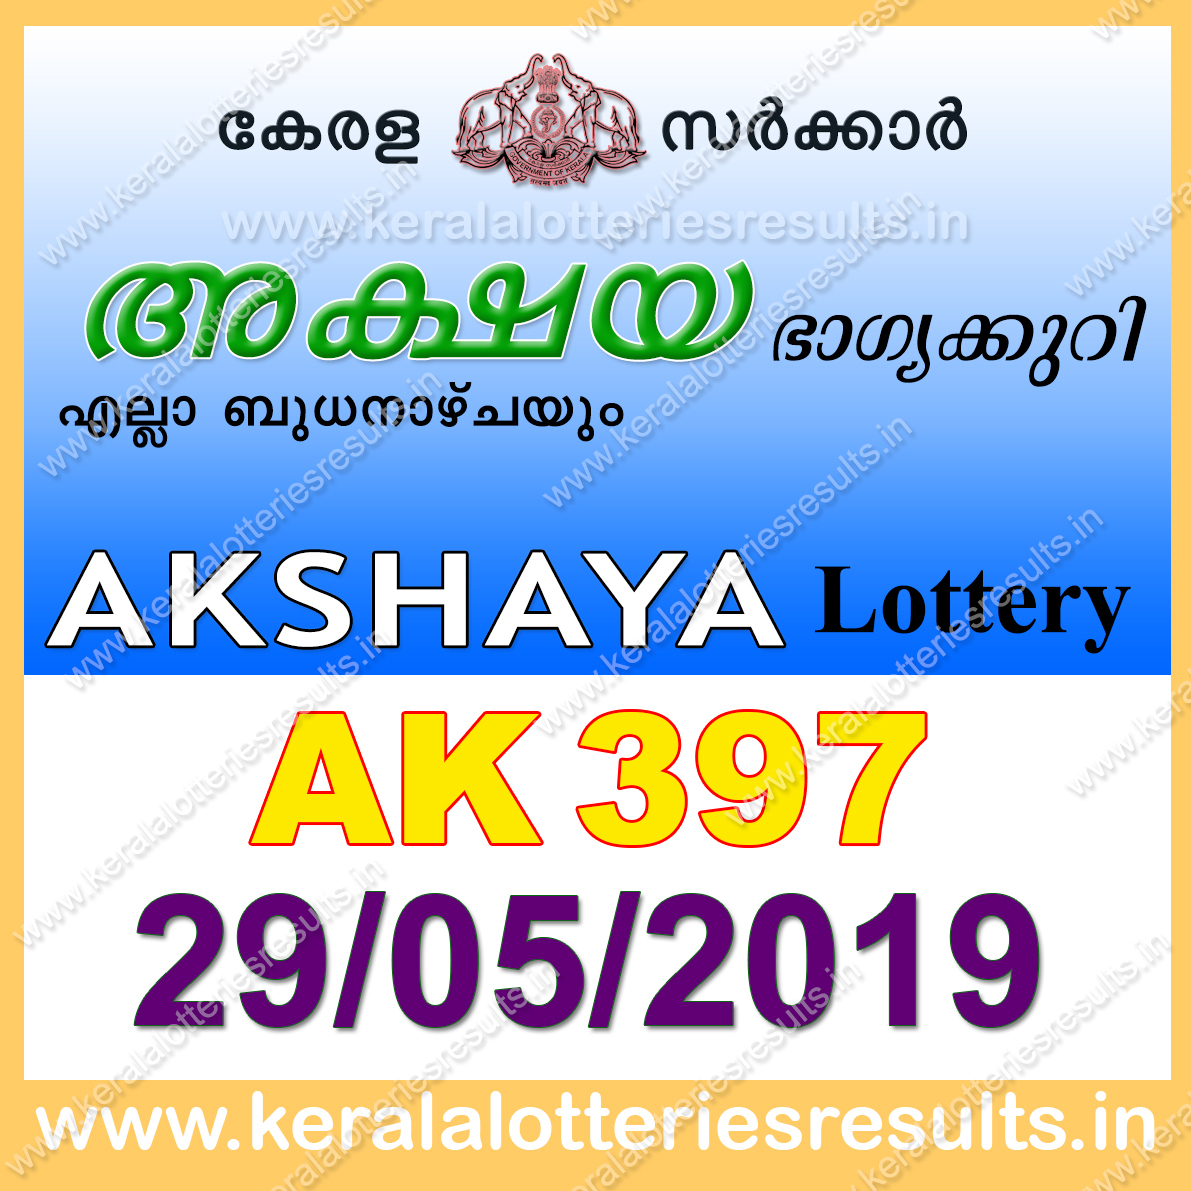 Kerala Lottery Result; 29-05-2019 "Akshaya Lottery Results 